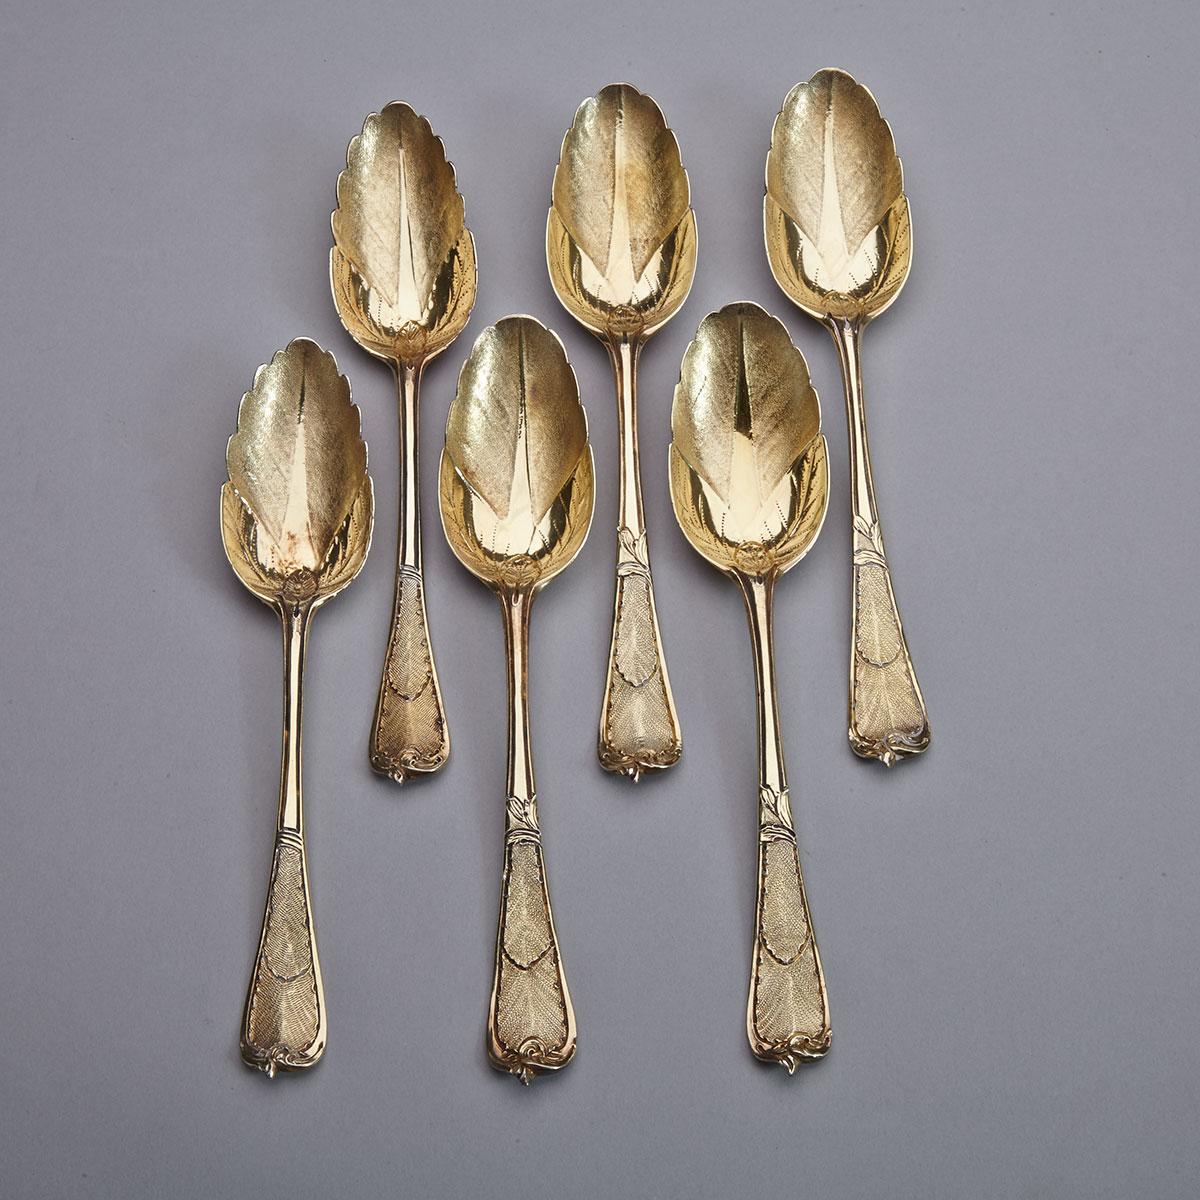 Six George II Silver-Gilt Berry Spoons, London, c.1749-56